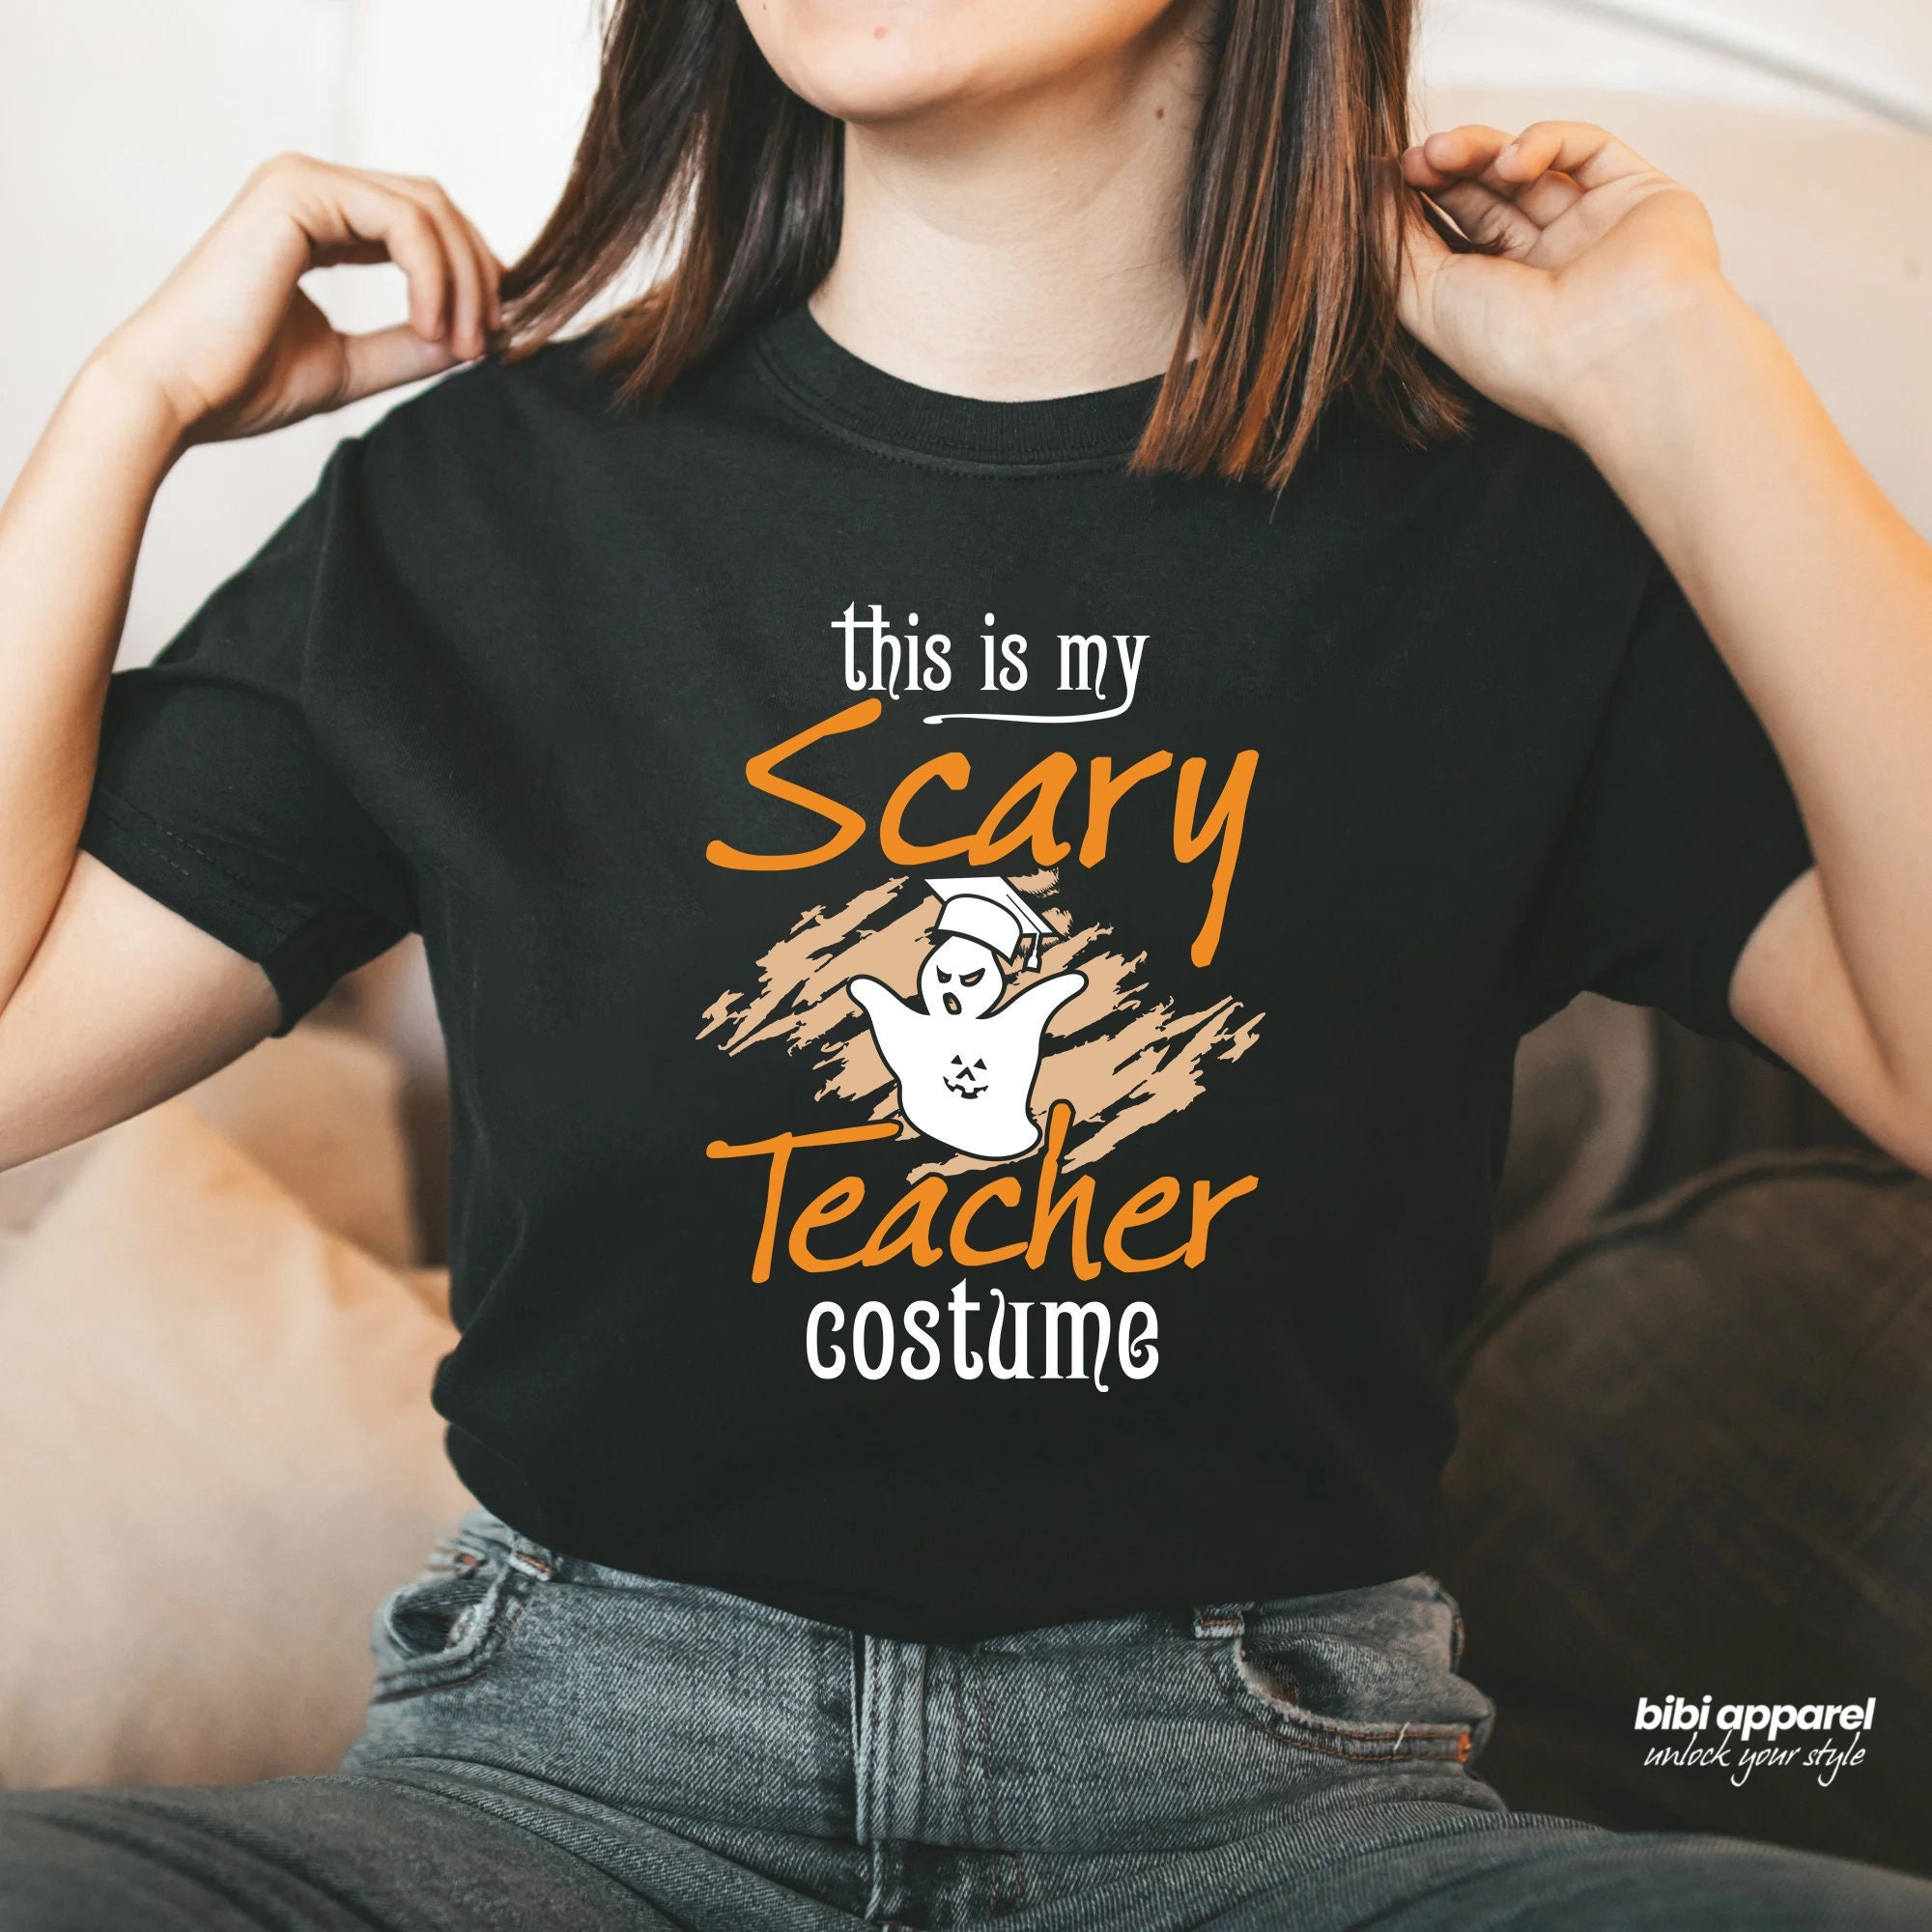 This Is My Scary Teacher Costume Funny Teacher Halloween T-Shirt